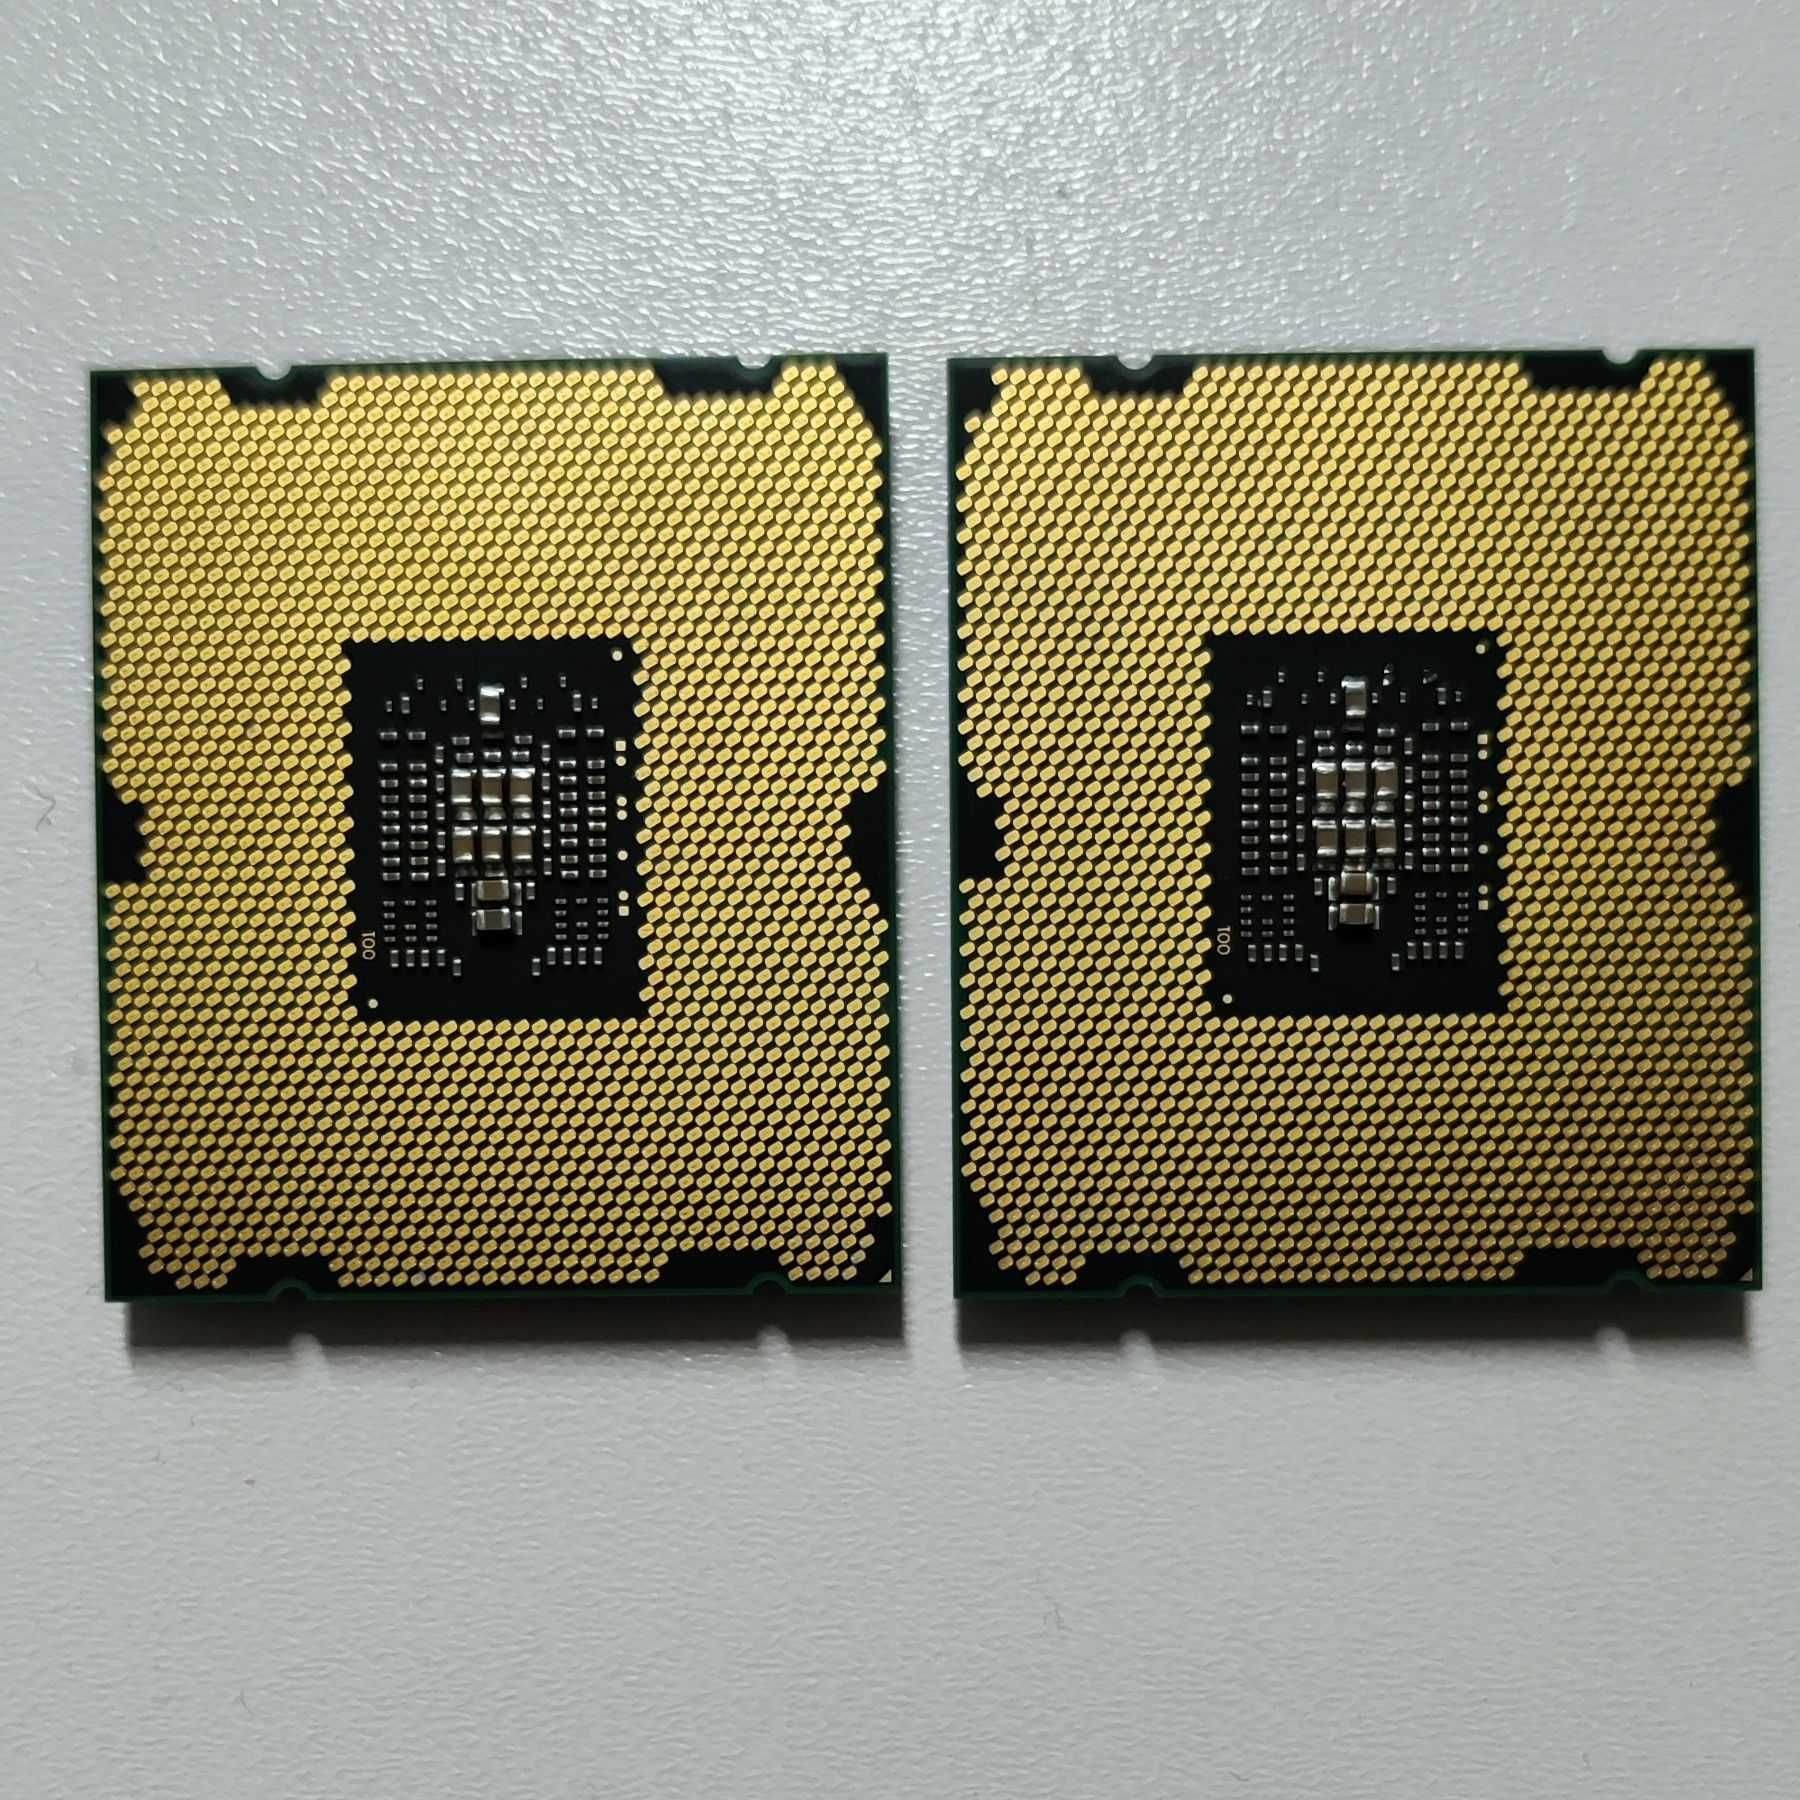 Procesor Intel Xeon E5-2643 QUAD 4x3.3GH - 2 sztuki